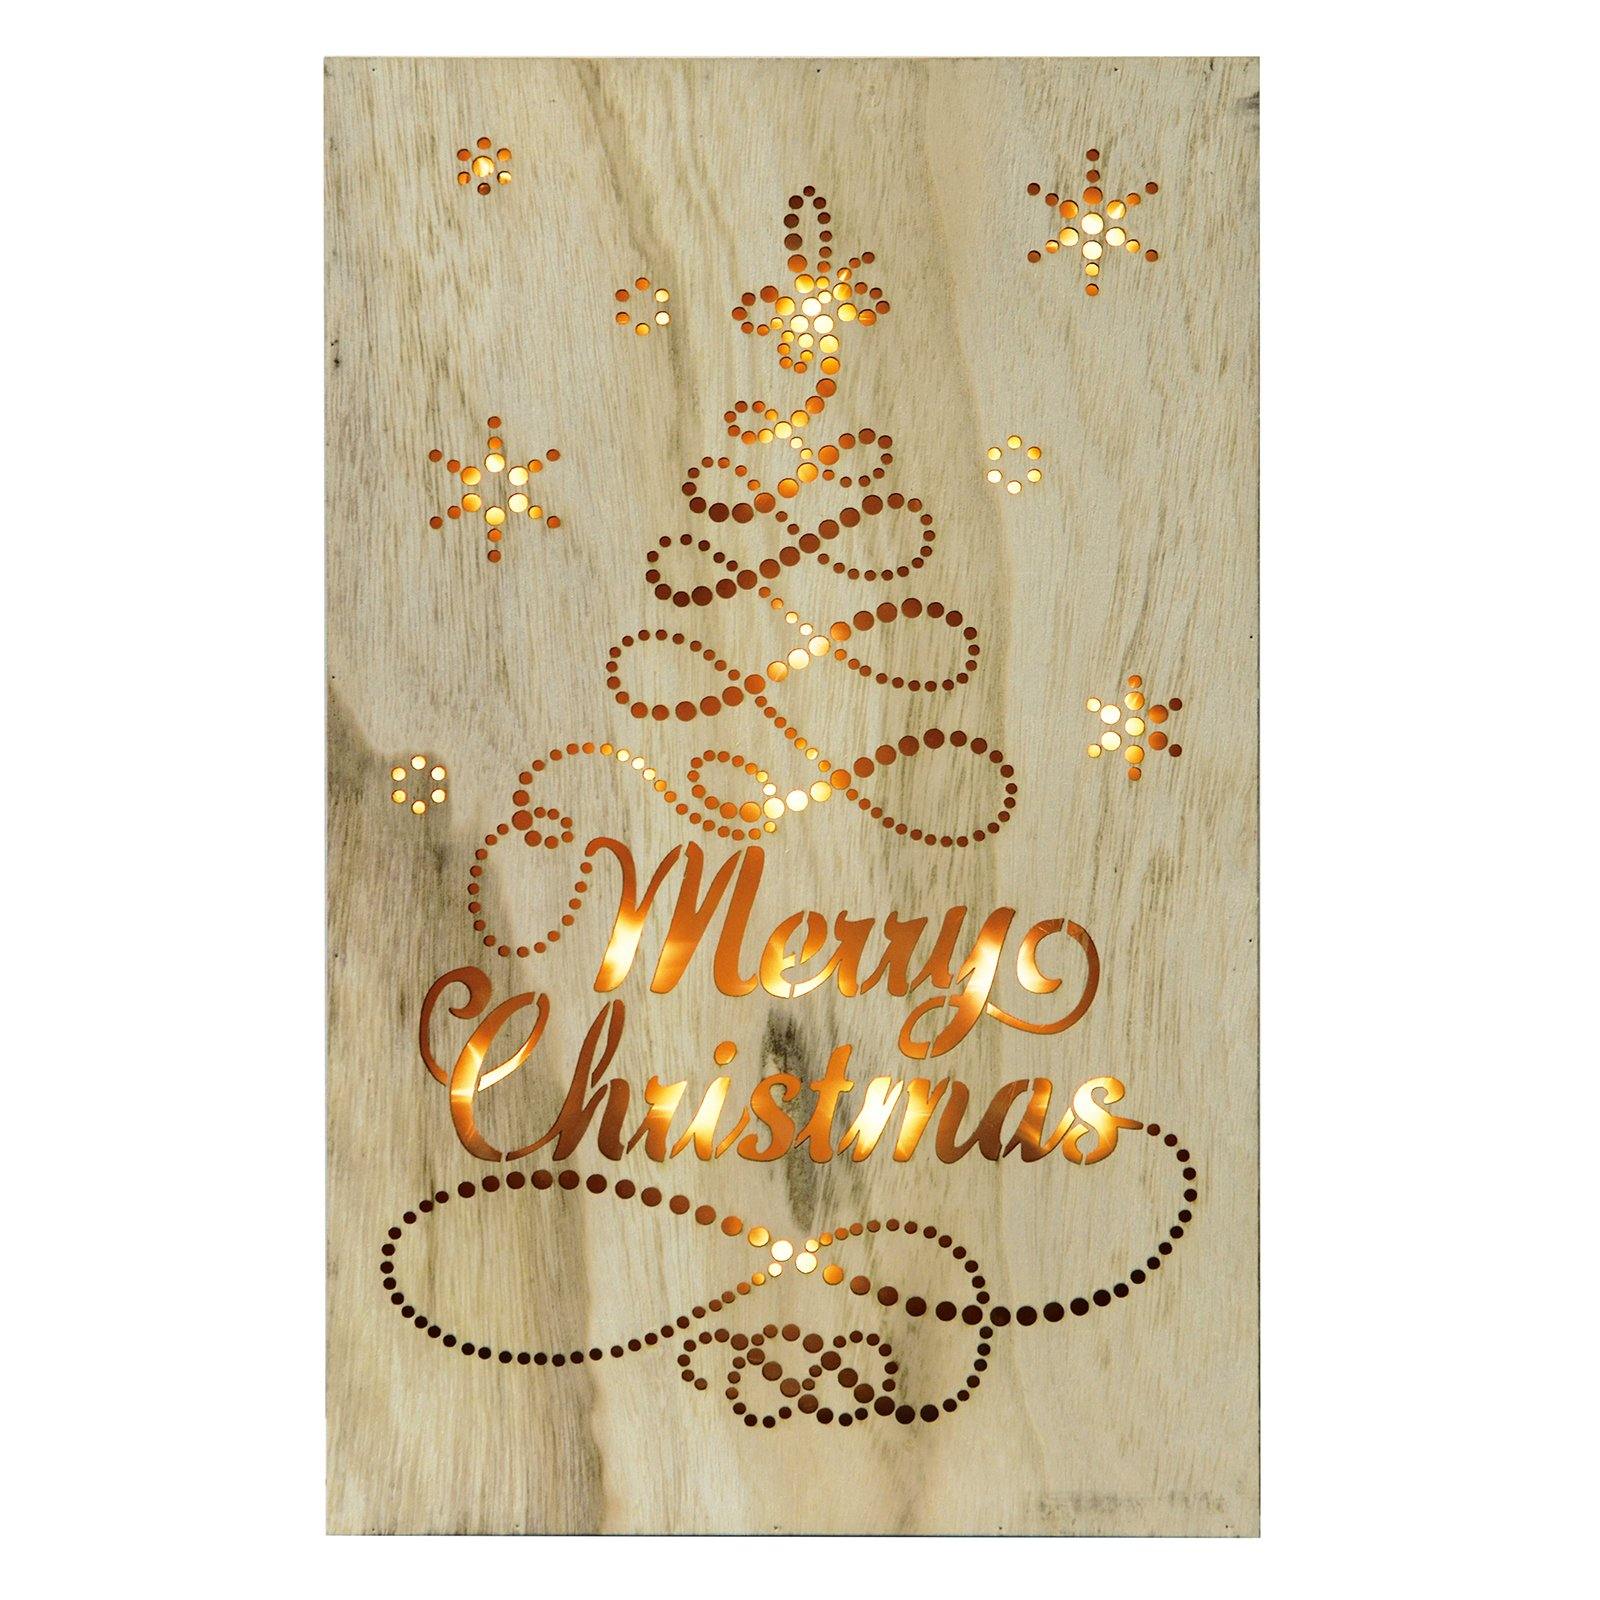 Mr Crimbo 15" Light Up Wooden Wall Plaque Christmas Decoration - MrCrimbo.co.uk -XS5027 - Merry Christmas -christmas decor